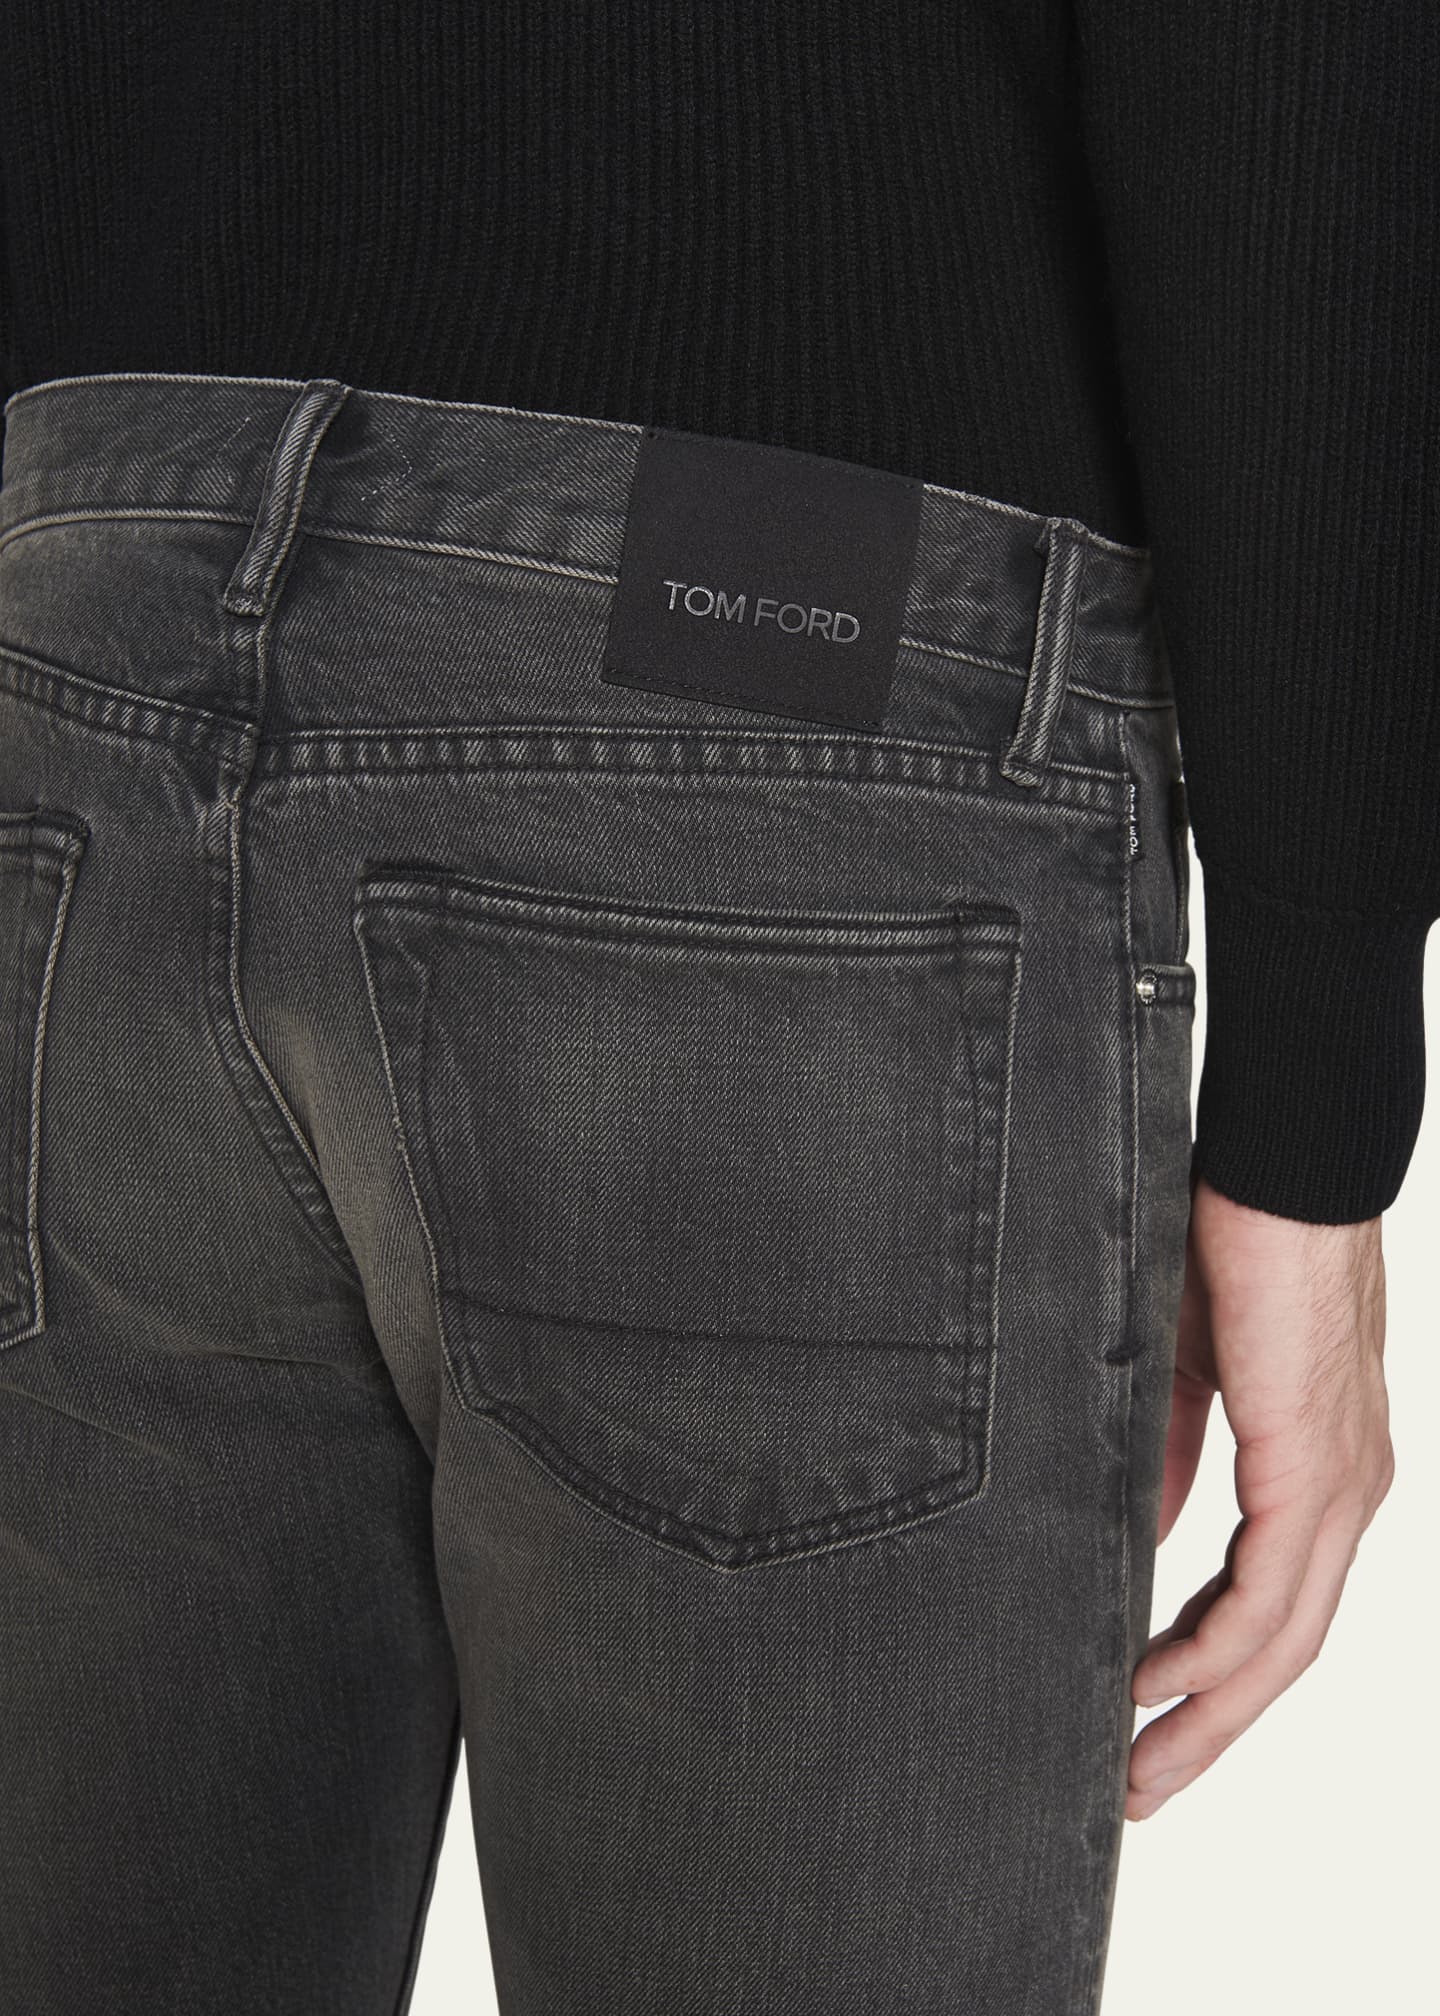 TOM FORD Men's Slim Fit Black Wash Jeans - Bergdorf Goodman